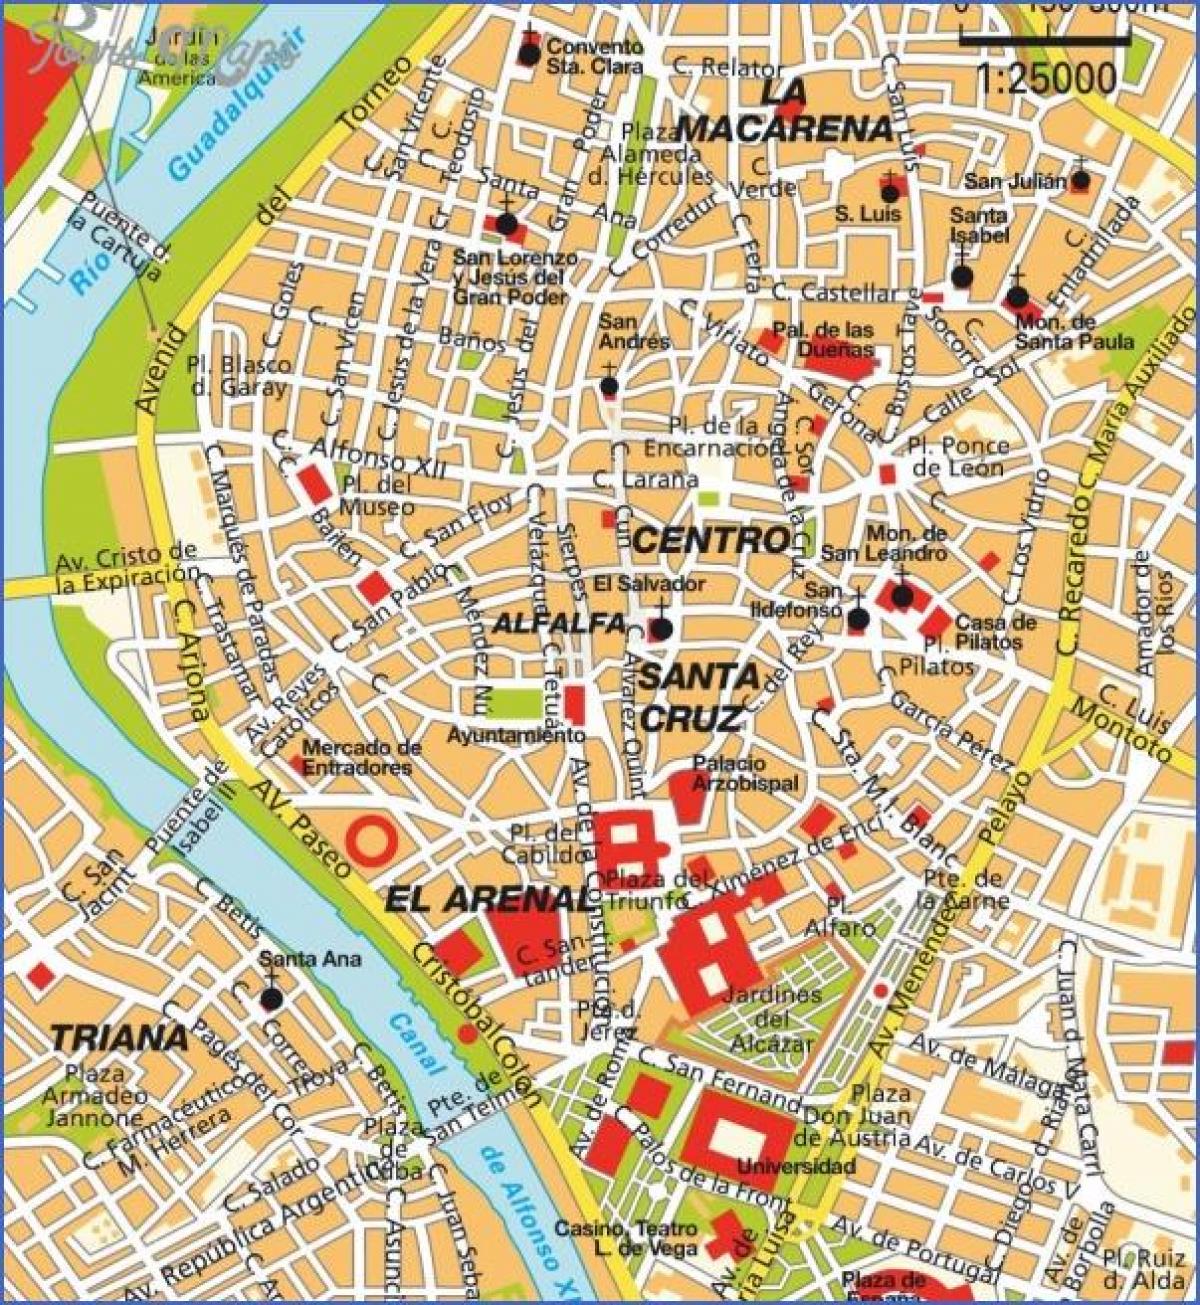 Sevilla espainiako mapa turistikoak